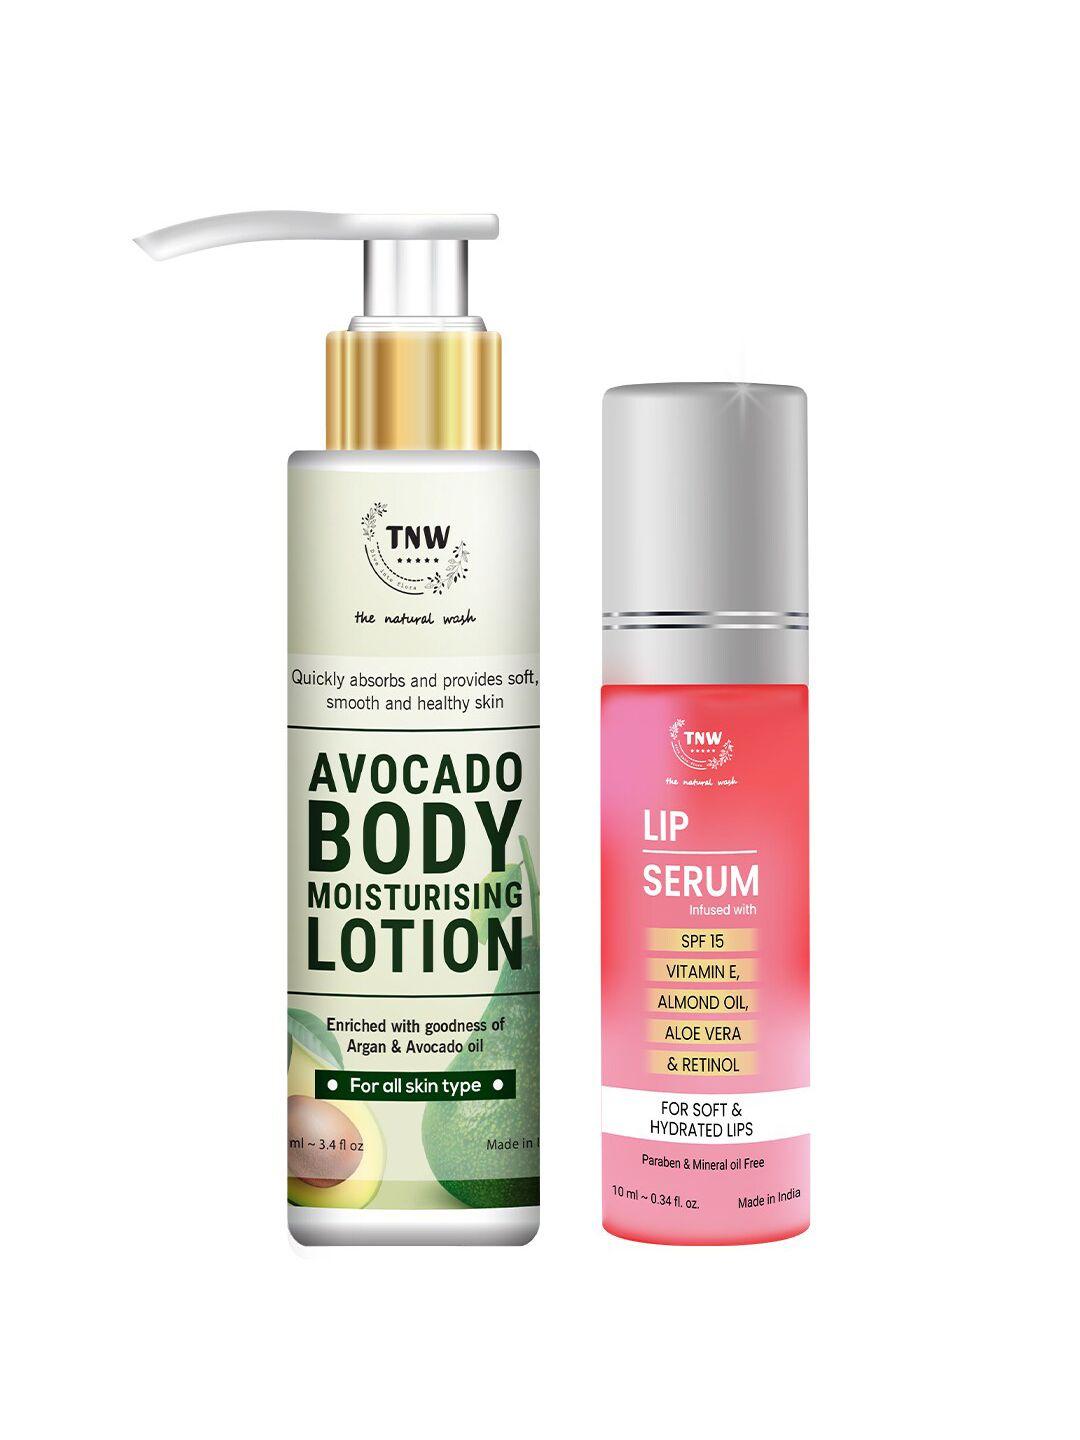 tnw-the-natural-wash-lip-serum-and-avocado-body-moisturizing-lotion